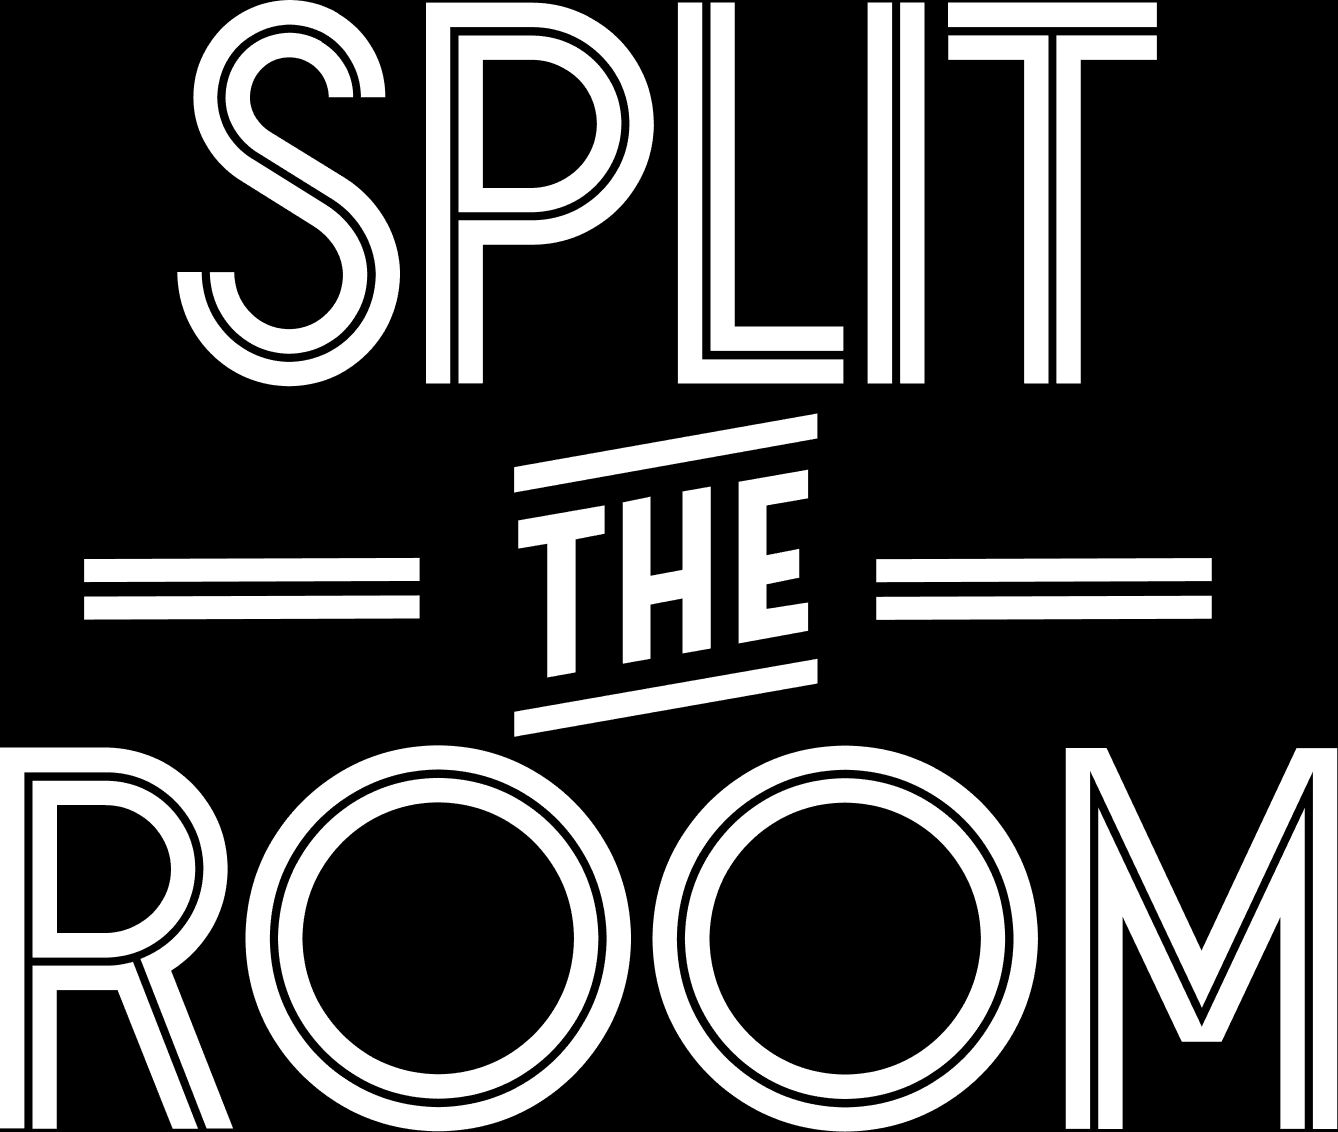 Jackbox Games - Split the Room